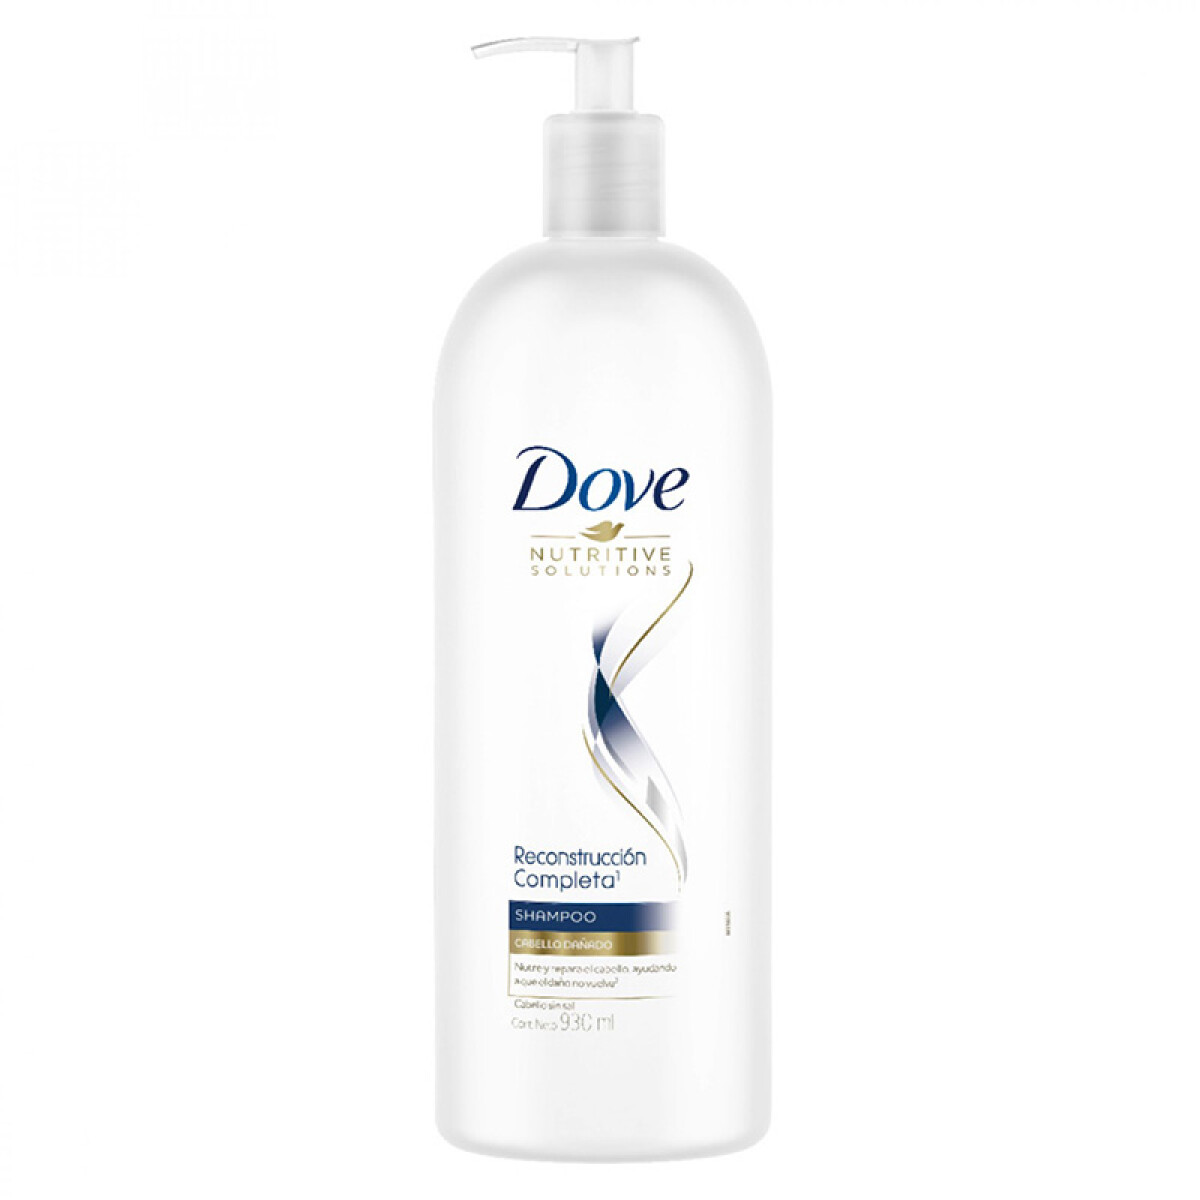 Dove shampoo - Reconstrucción completa 750 ml 